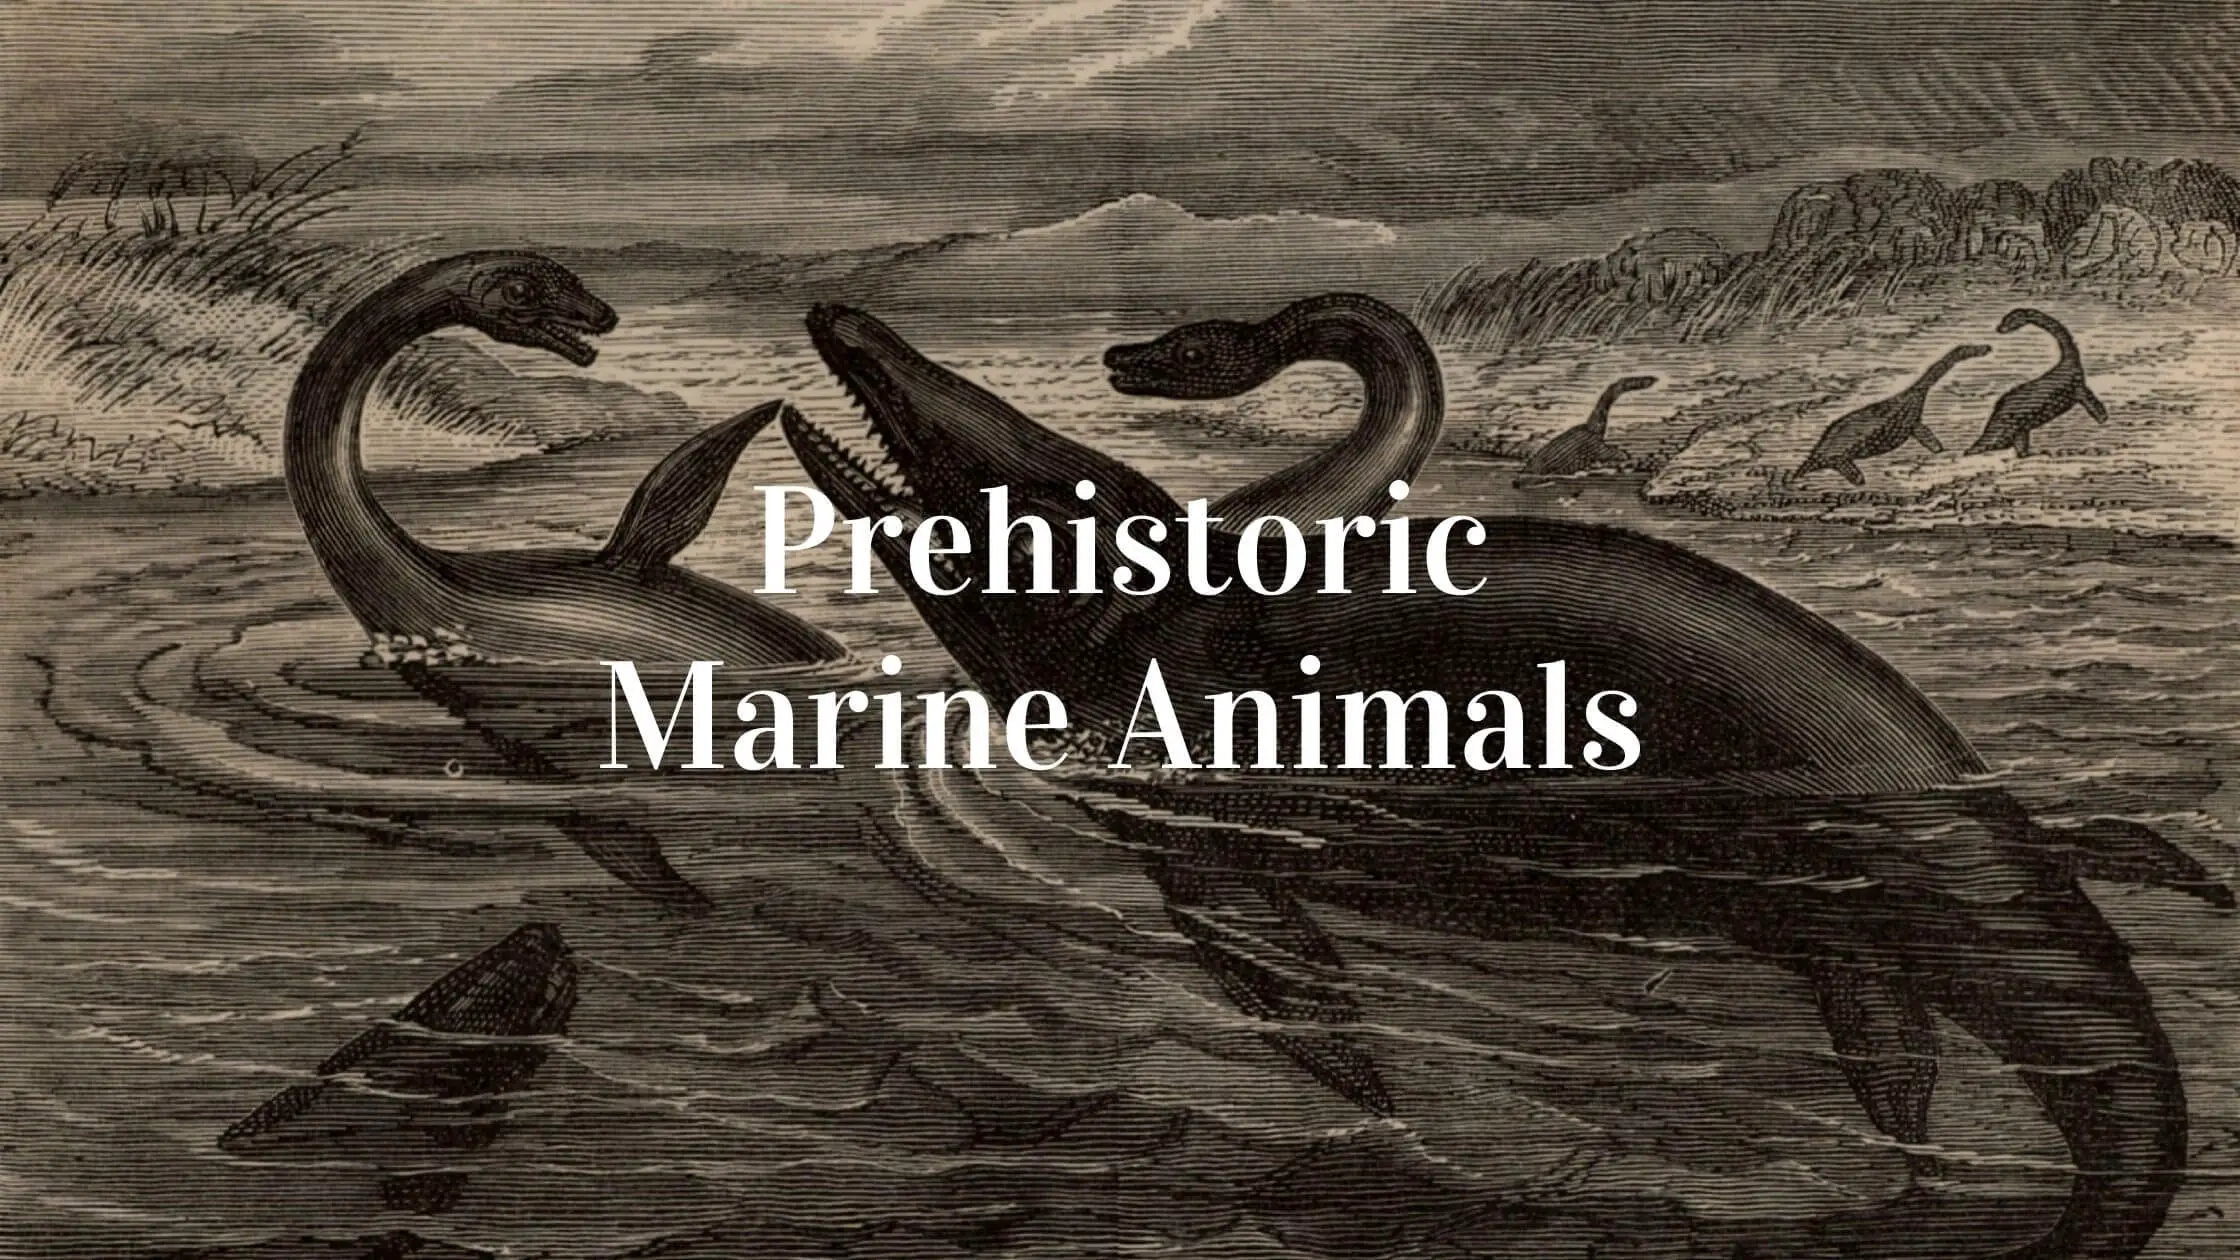 7 Prehistoric marine animals that will intrigue you - Proto Animal